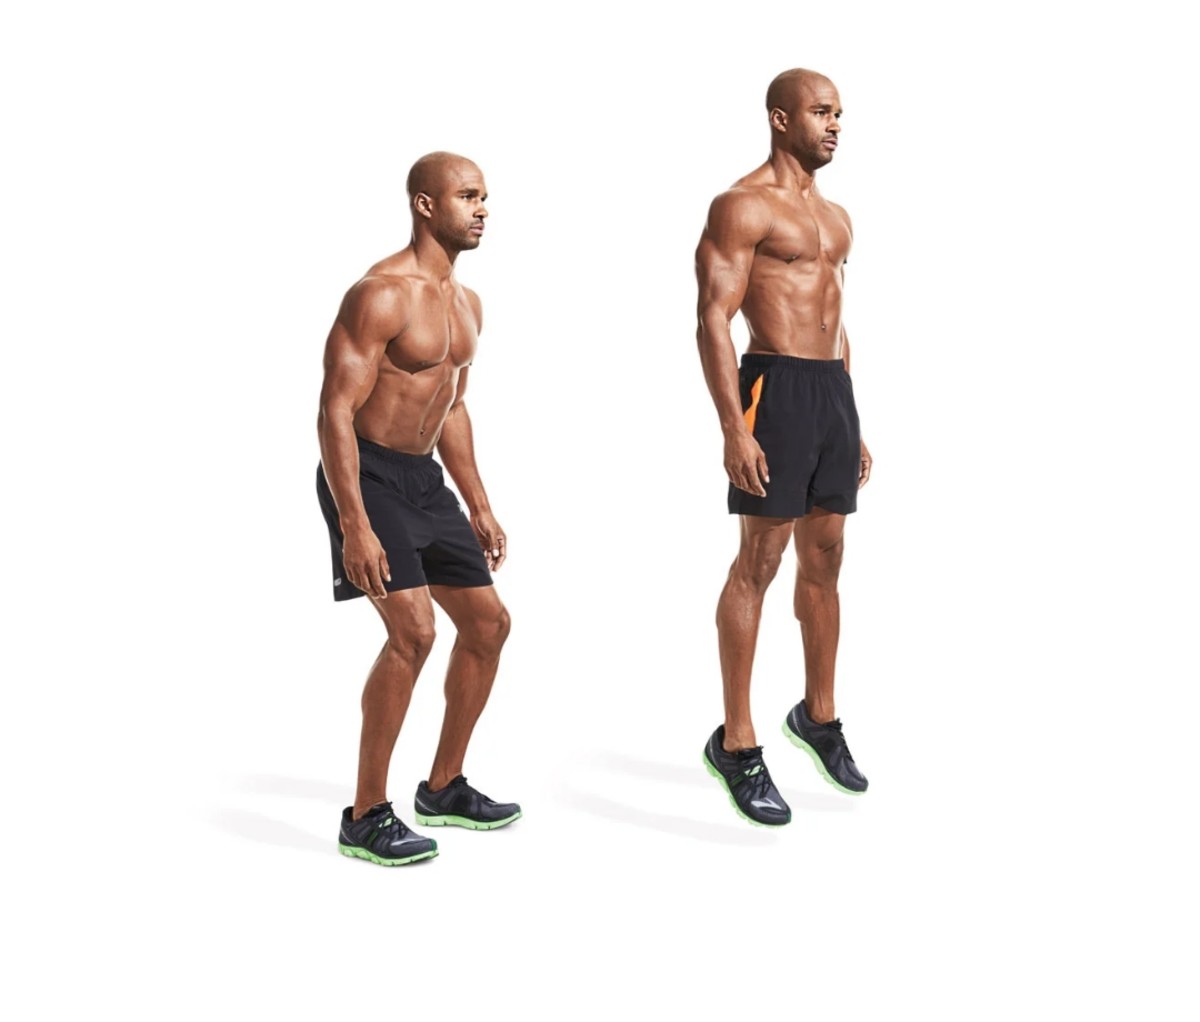 Calf Exercises: 18 Best Workouts To Bulk Up Skinny Legs - Men's